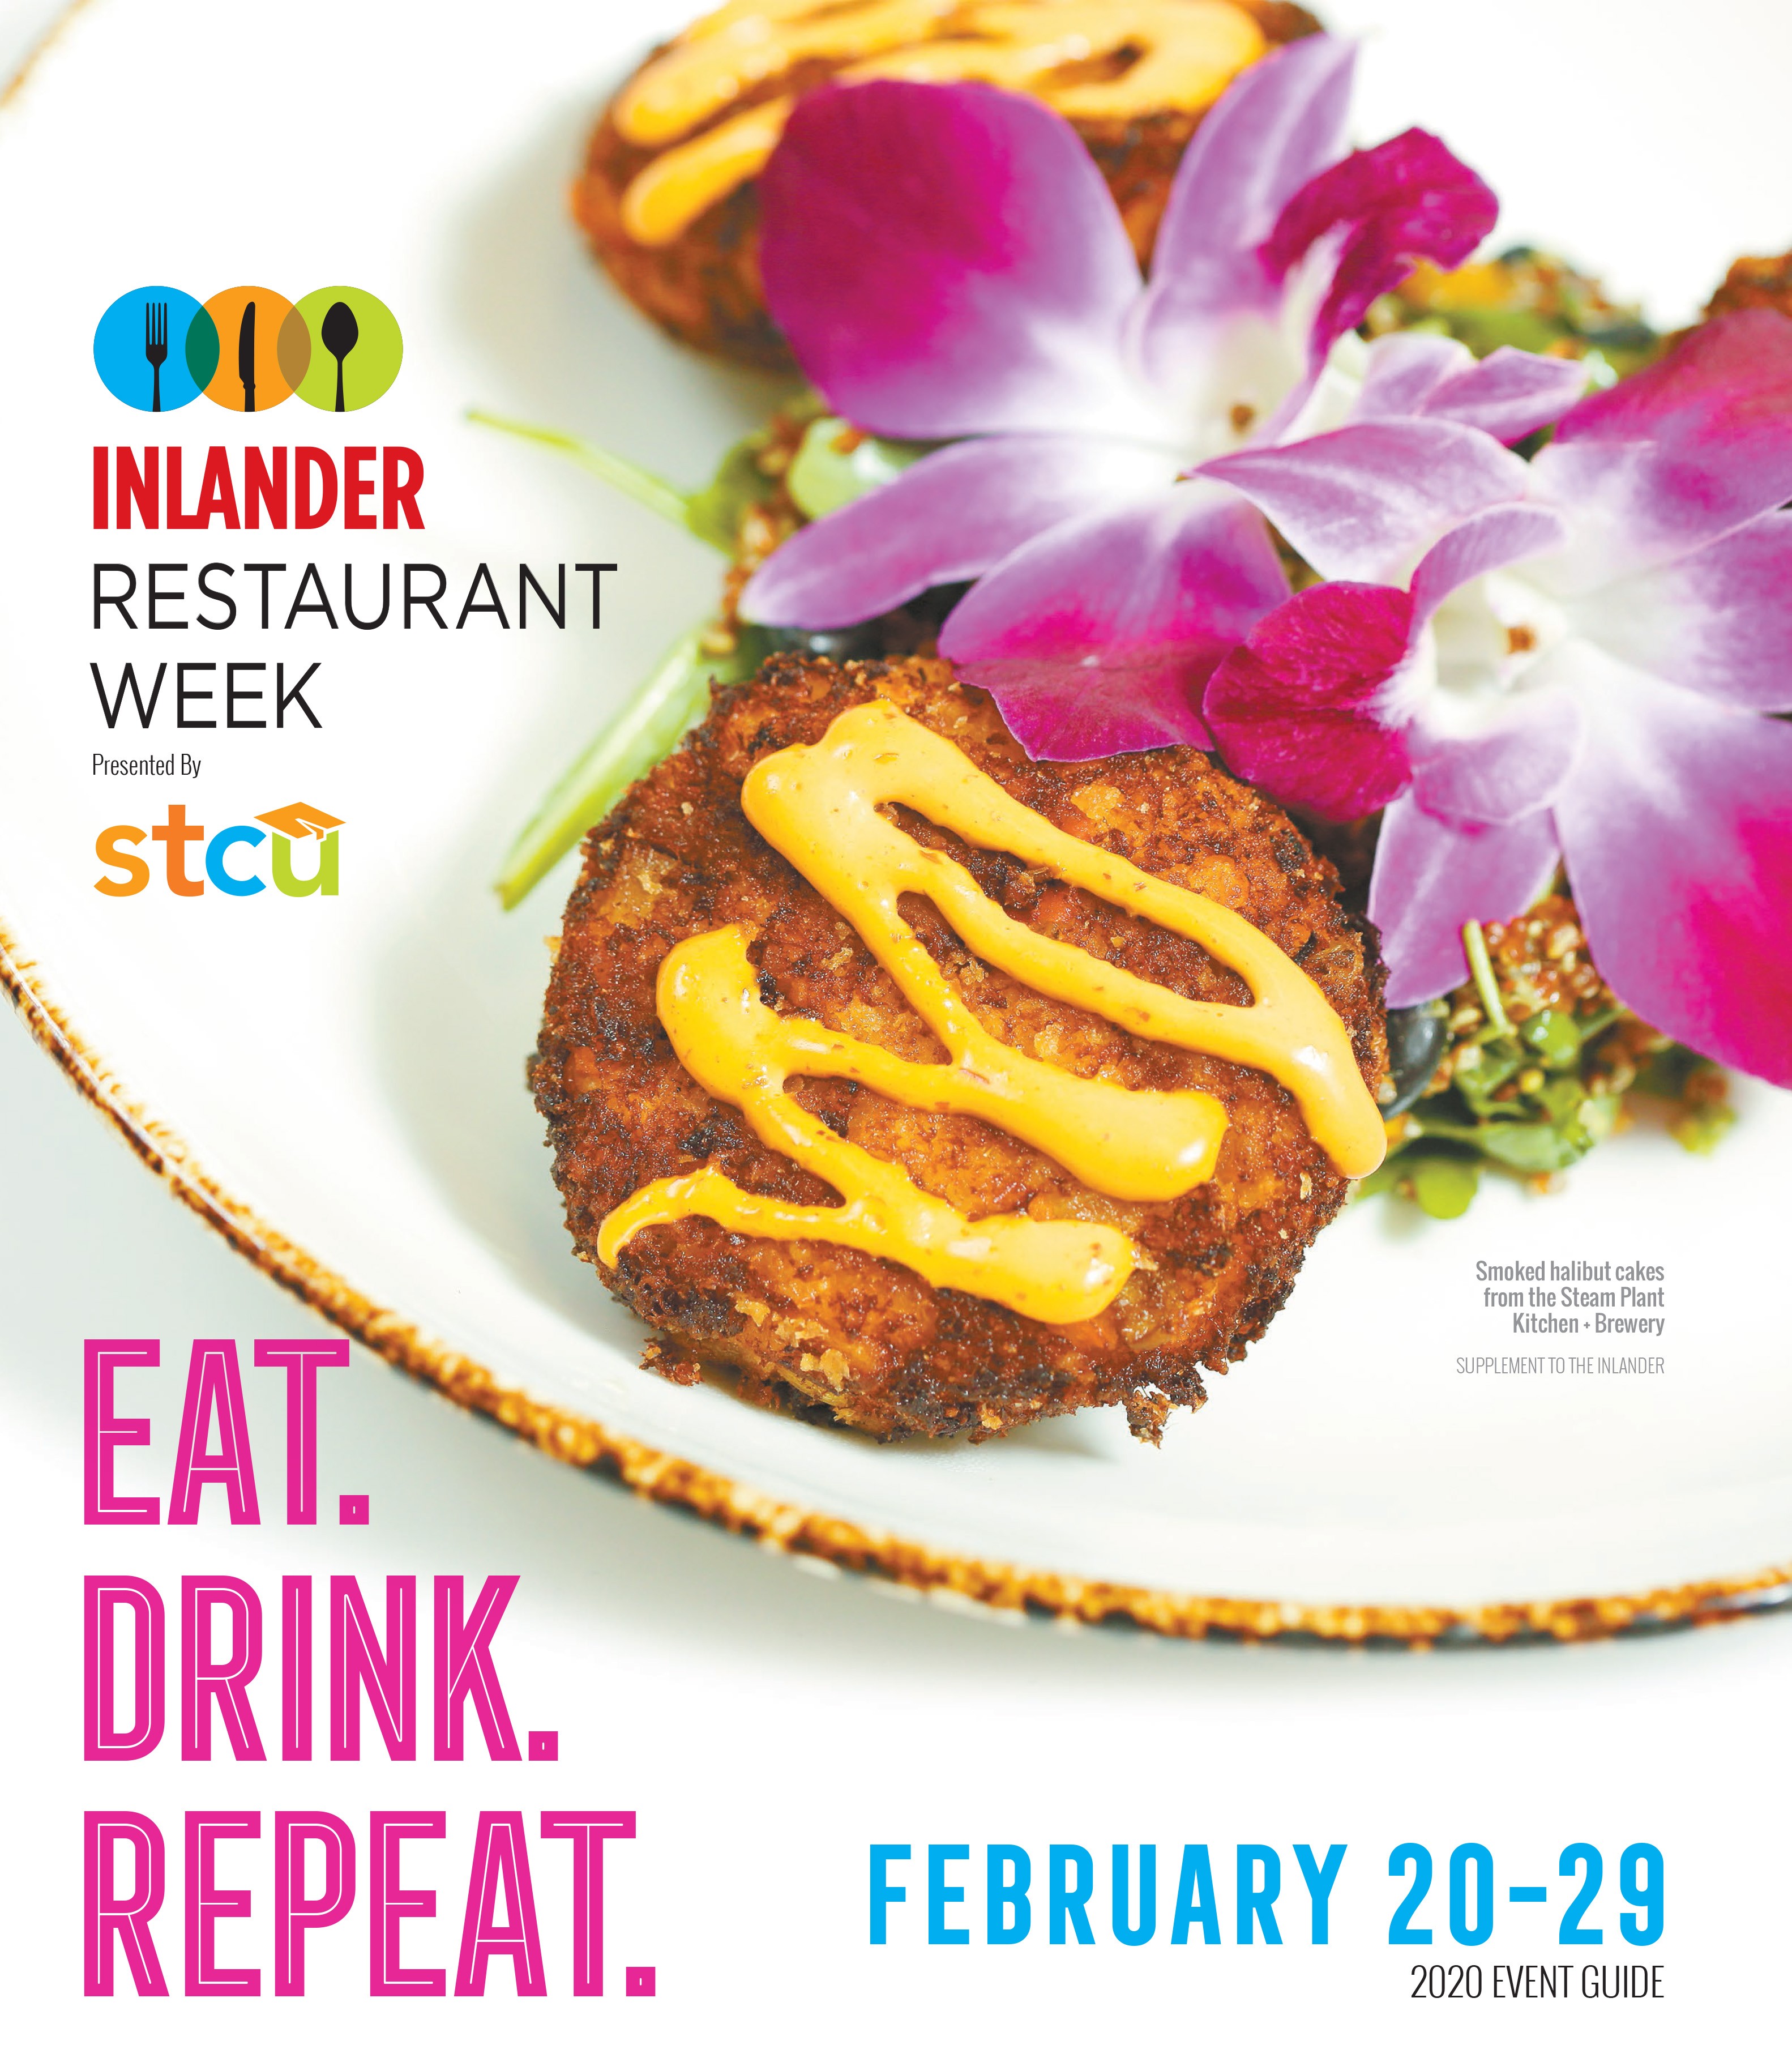 Inlander Restaurant Week 2020 menus are now available! Food News